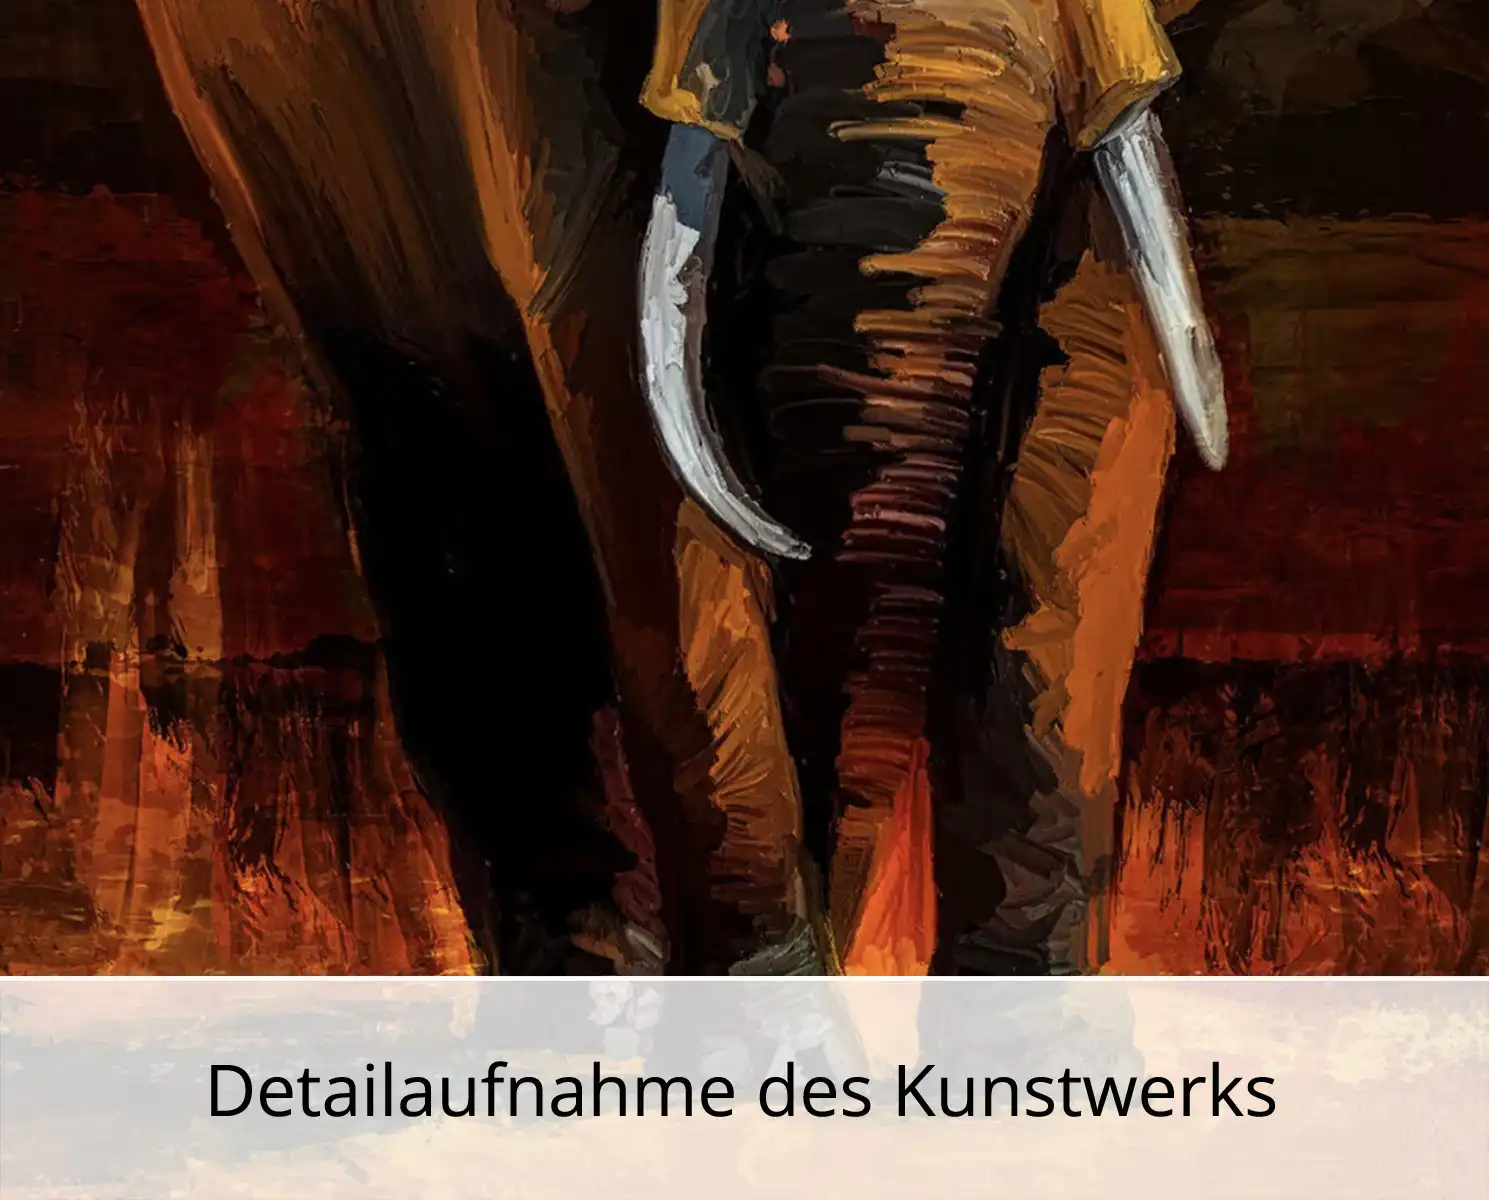 Moderne Pop Art: "Afrikanischer Elefant", H. Mühlbauer-Gardemin, Original/serielles Unikat